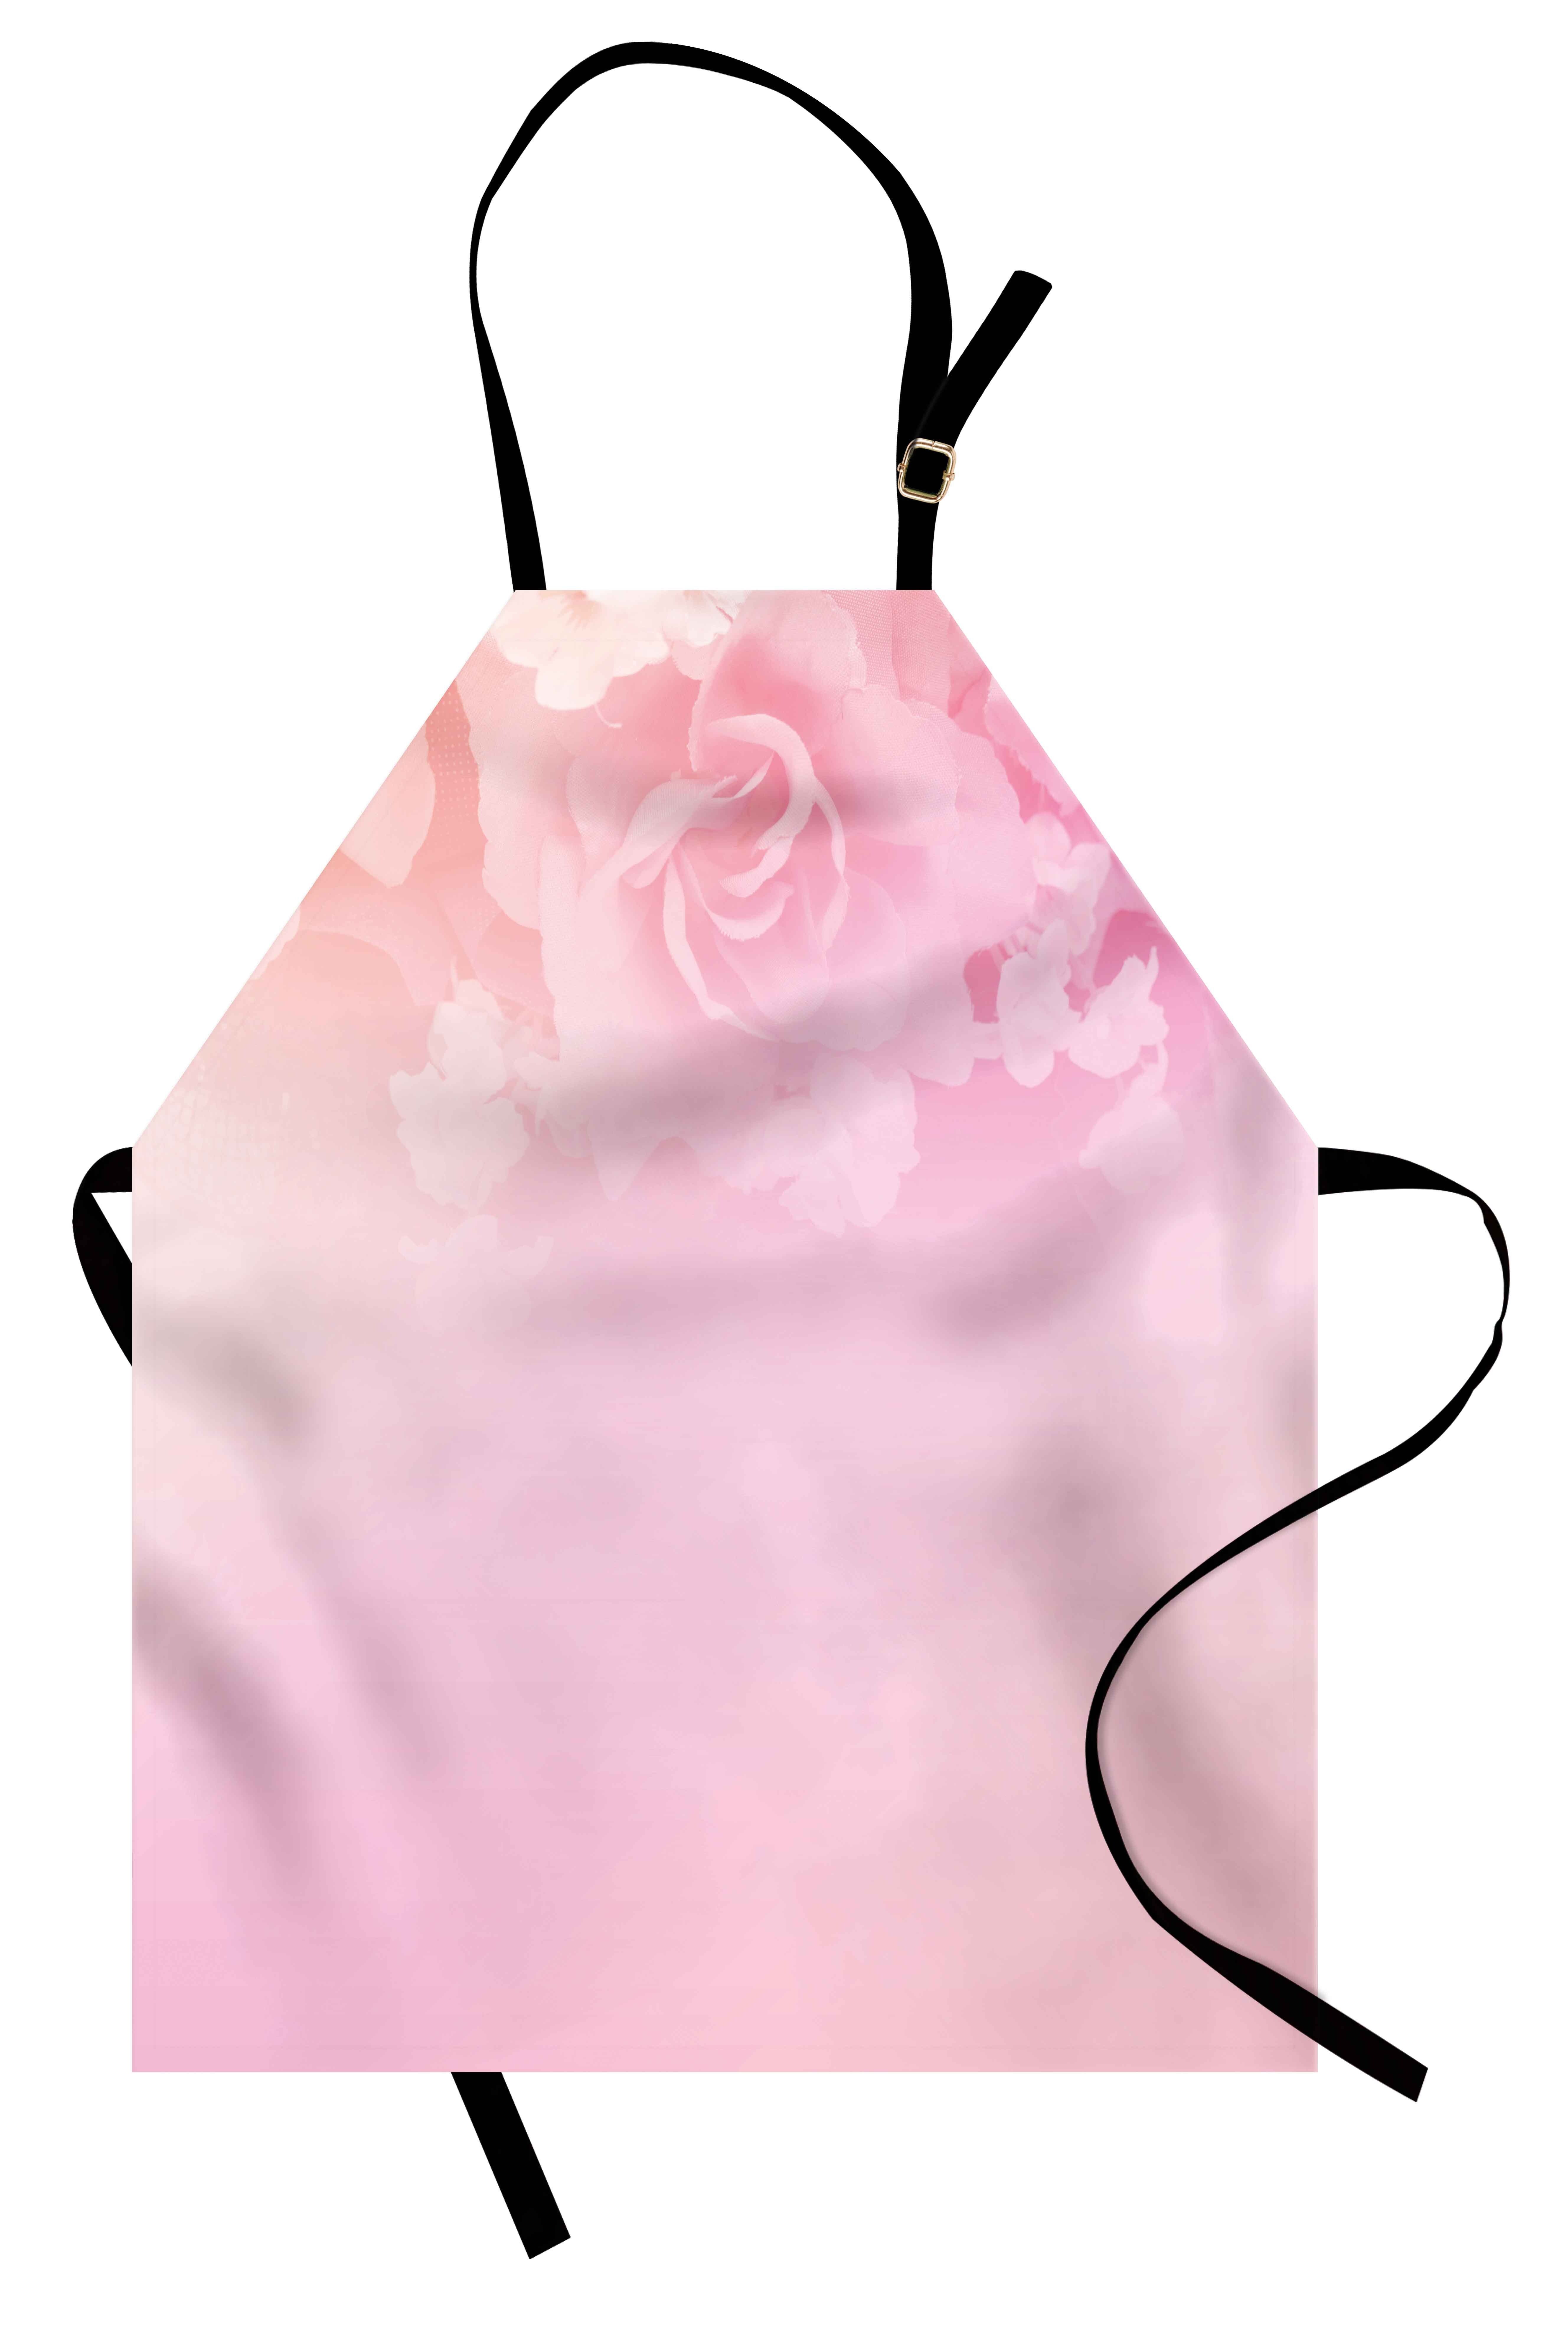 Abakuhaus Kochschürze Höhenverstellbar Klare Farben ohne verblassen, Blassrosa Roses Braut Kunst